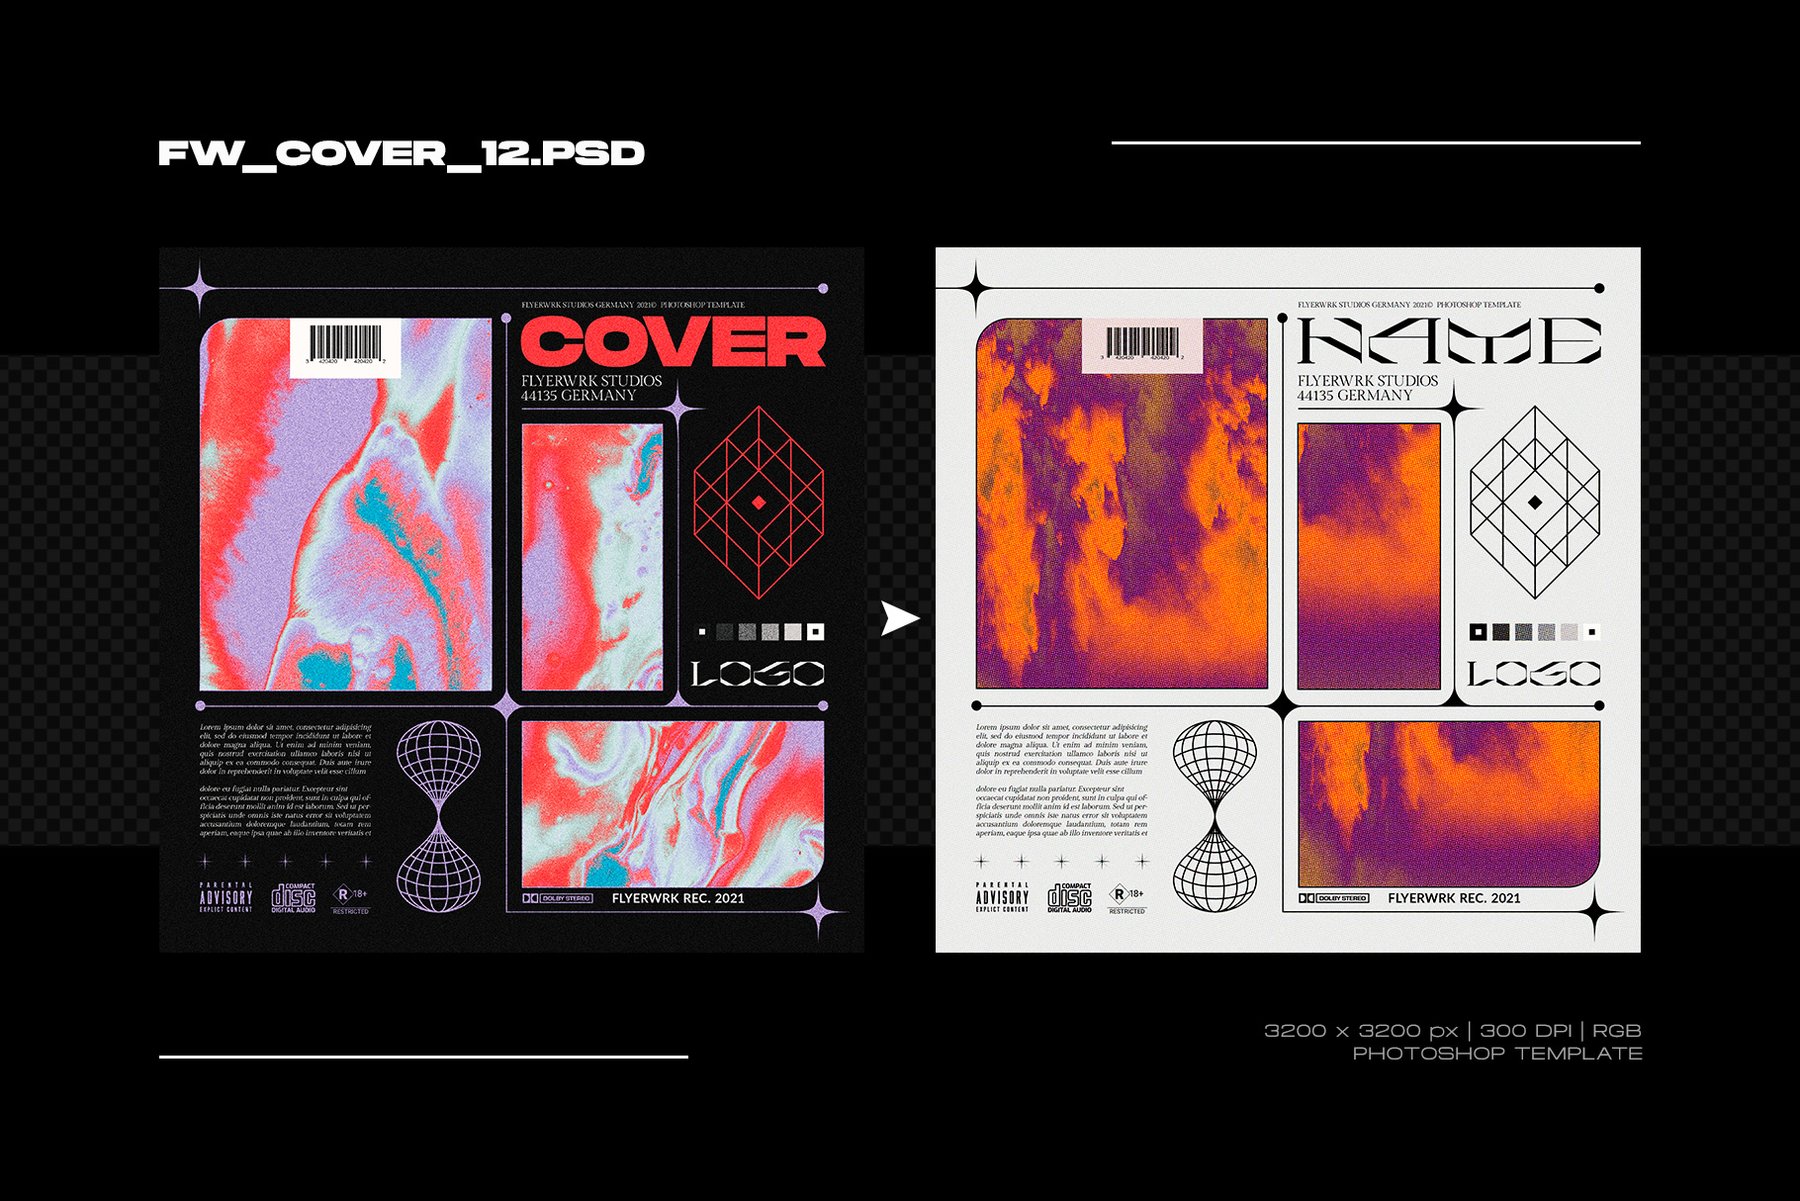 Flyerwrk 嘻哈说唱高级创意大胆艺术魅力封面设计Photoshop模板 COVER DESIGNS VOL.03